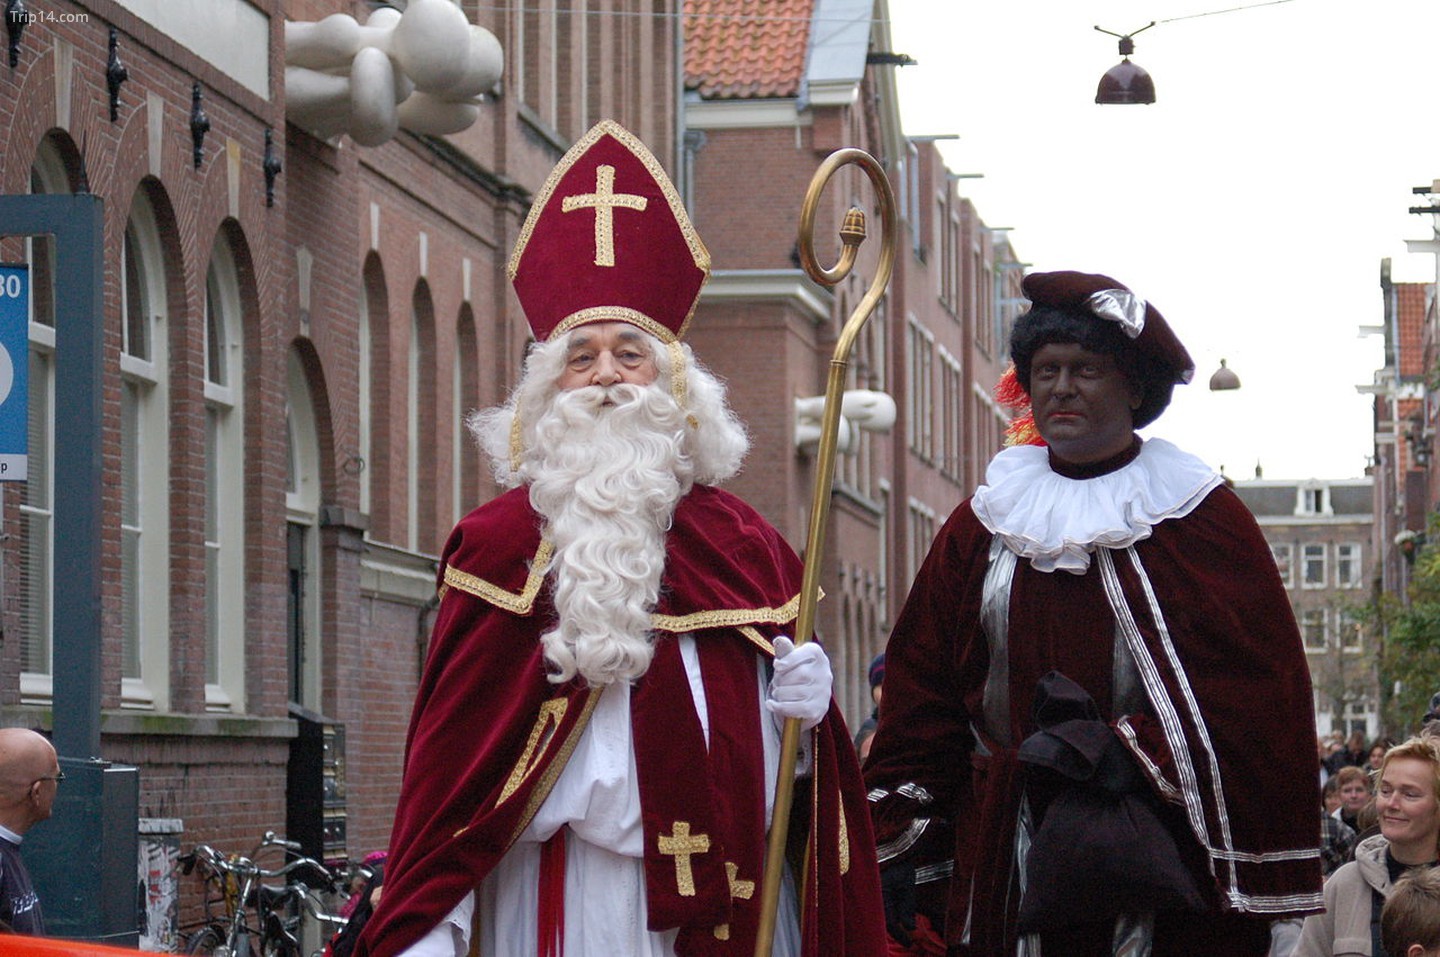  Sinterklaas và Zwarte Piet   |   